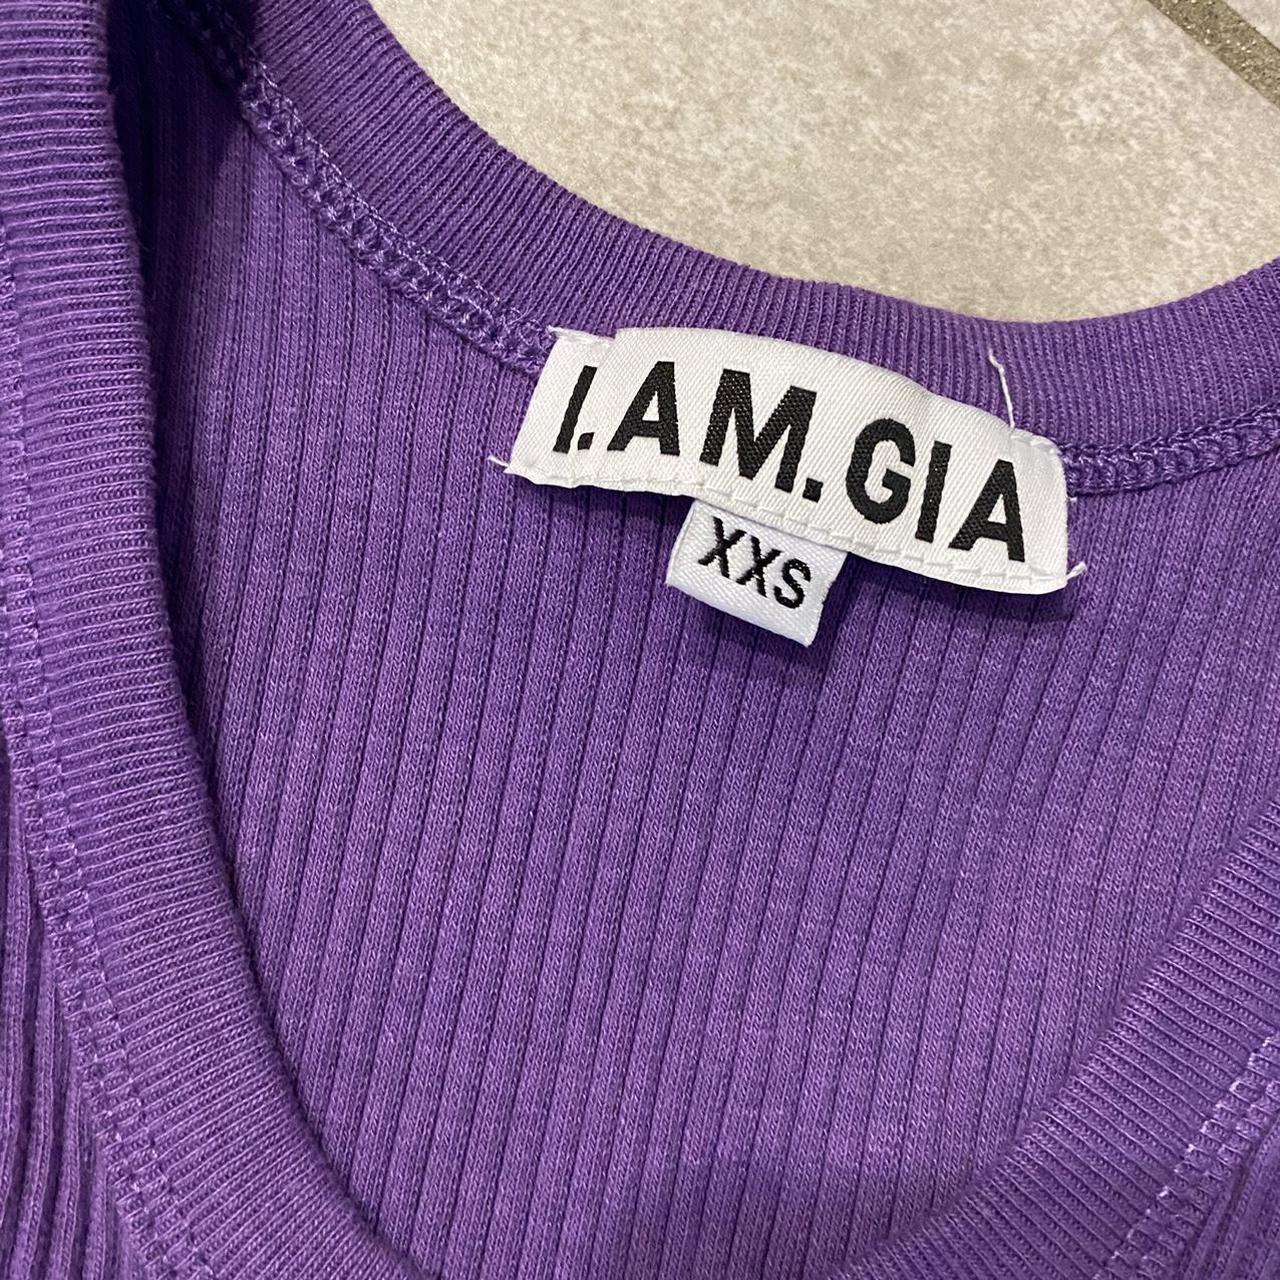 I.AM.GIA Women's Purple Vests-tanks-camis (2)